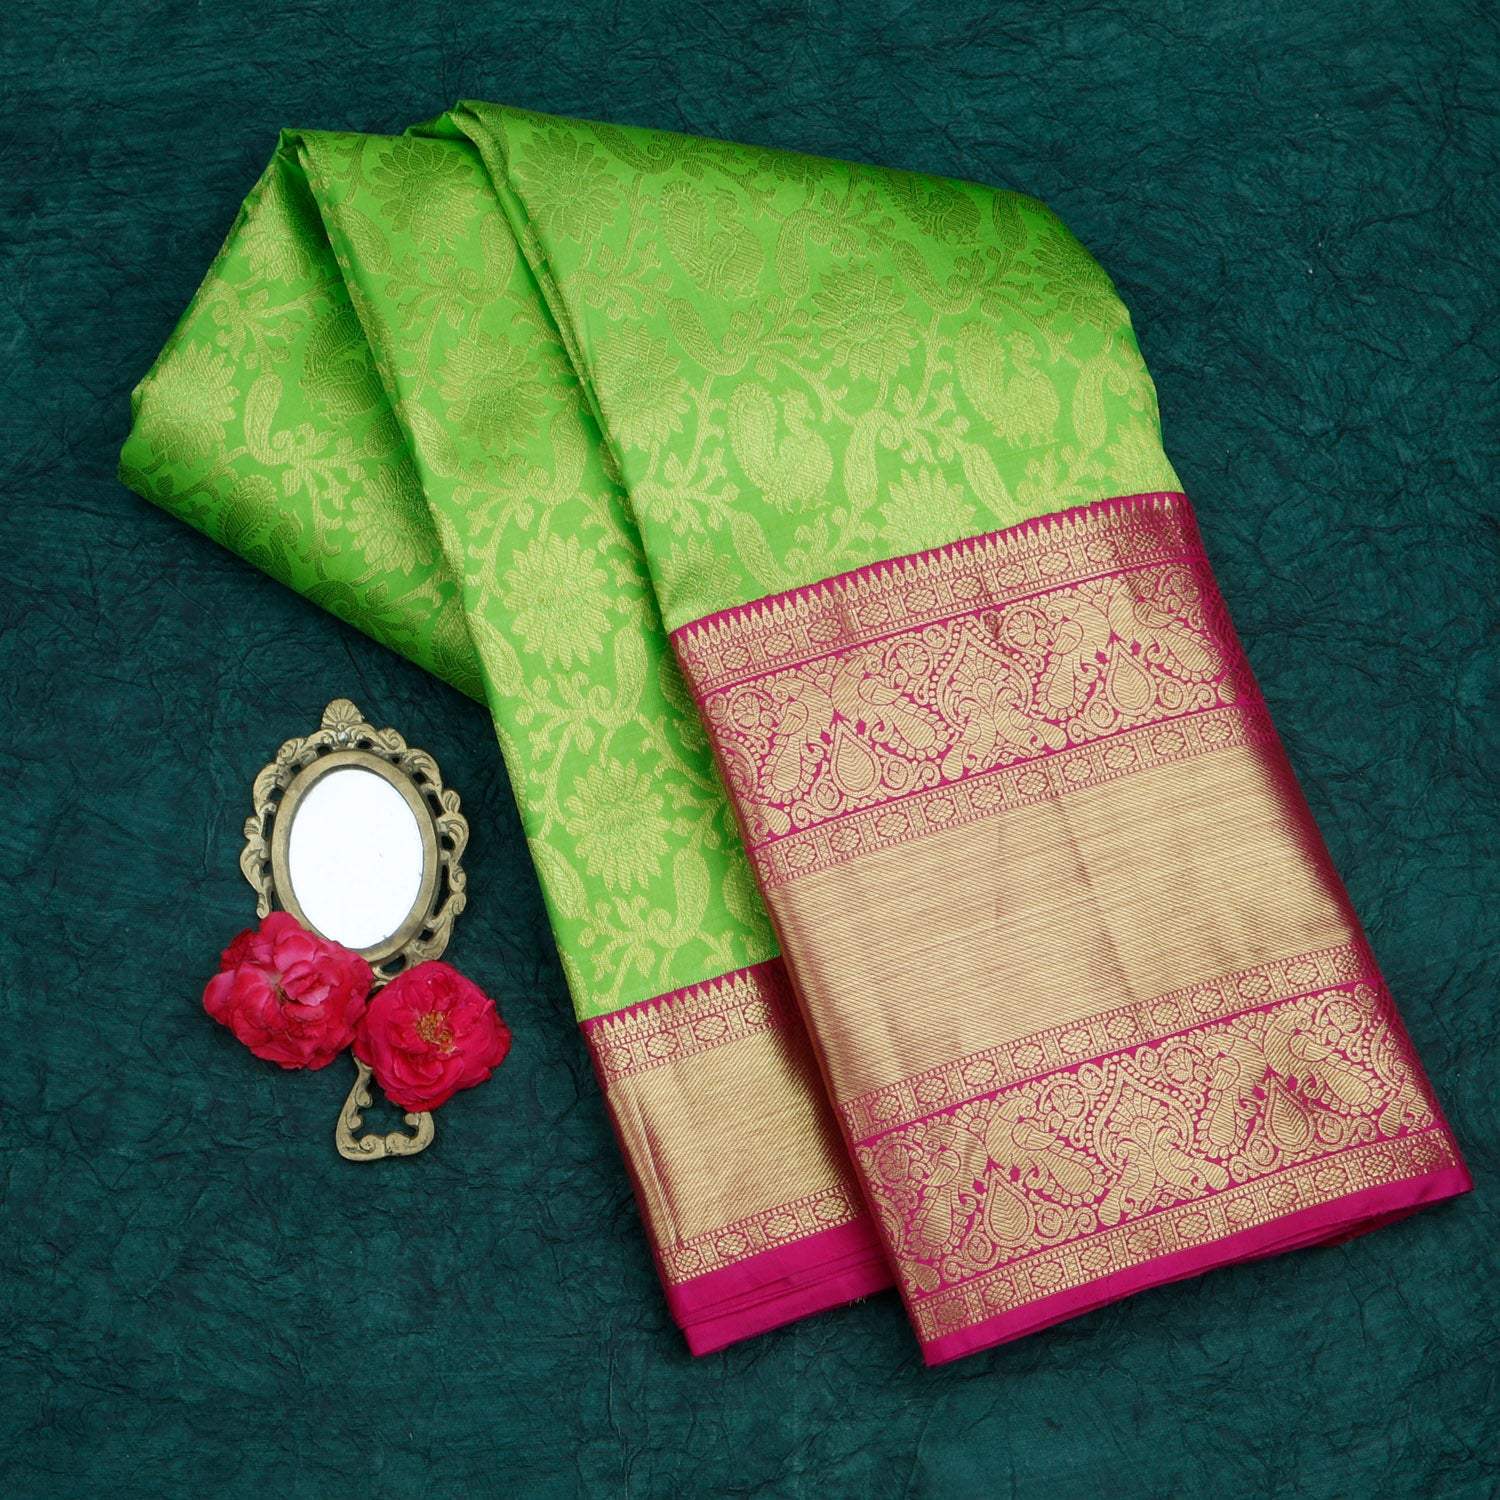 Vibrant Green Kanjivaram Silk Saree With Floral And Mayil Motif Pattern - Singhania's